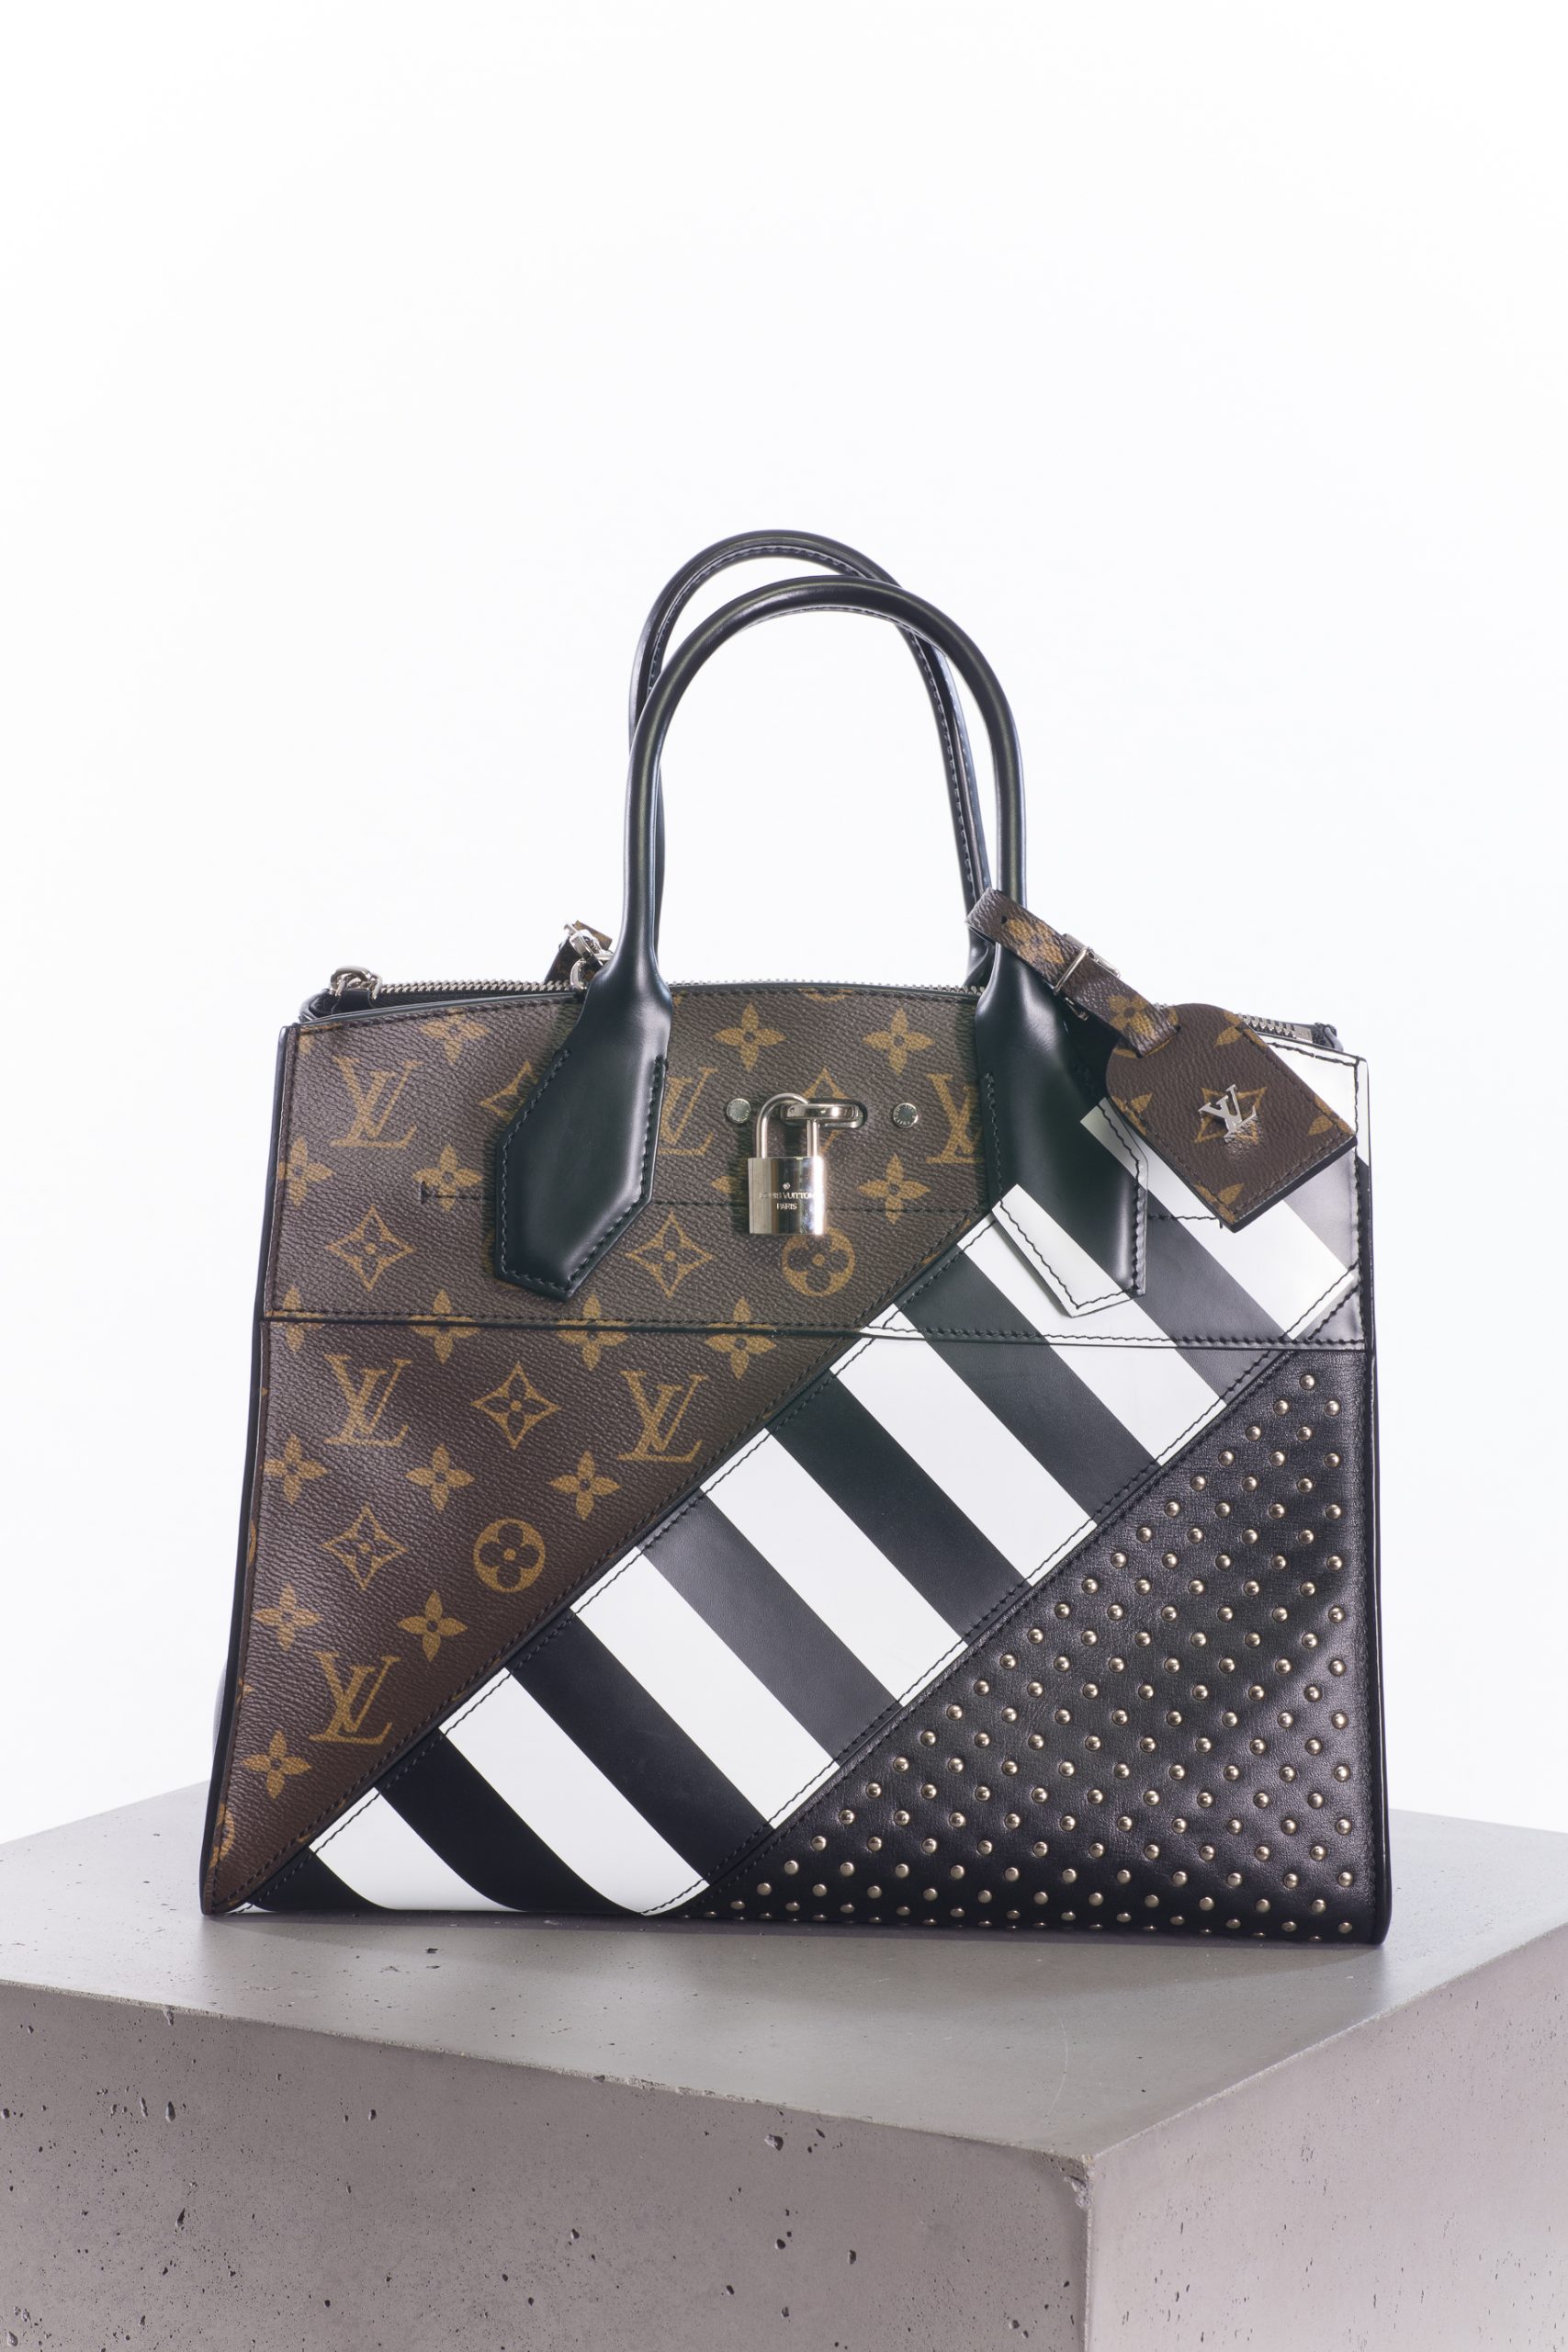 Louis Vuitton Shirt, FR42 - Huntessa Luxury Online Consignment Boutique